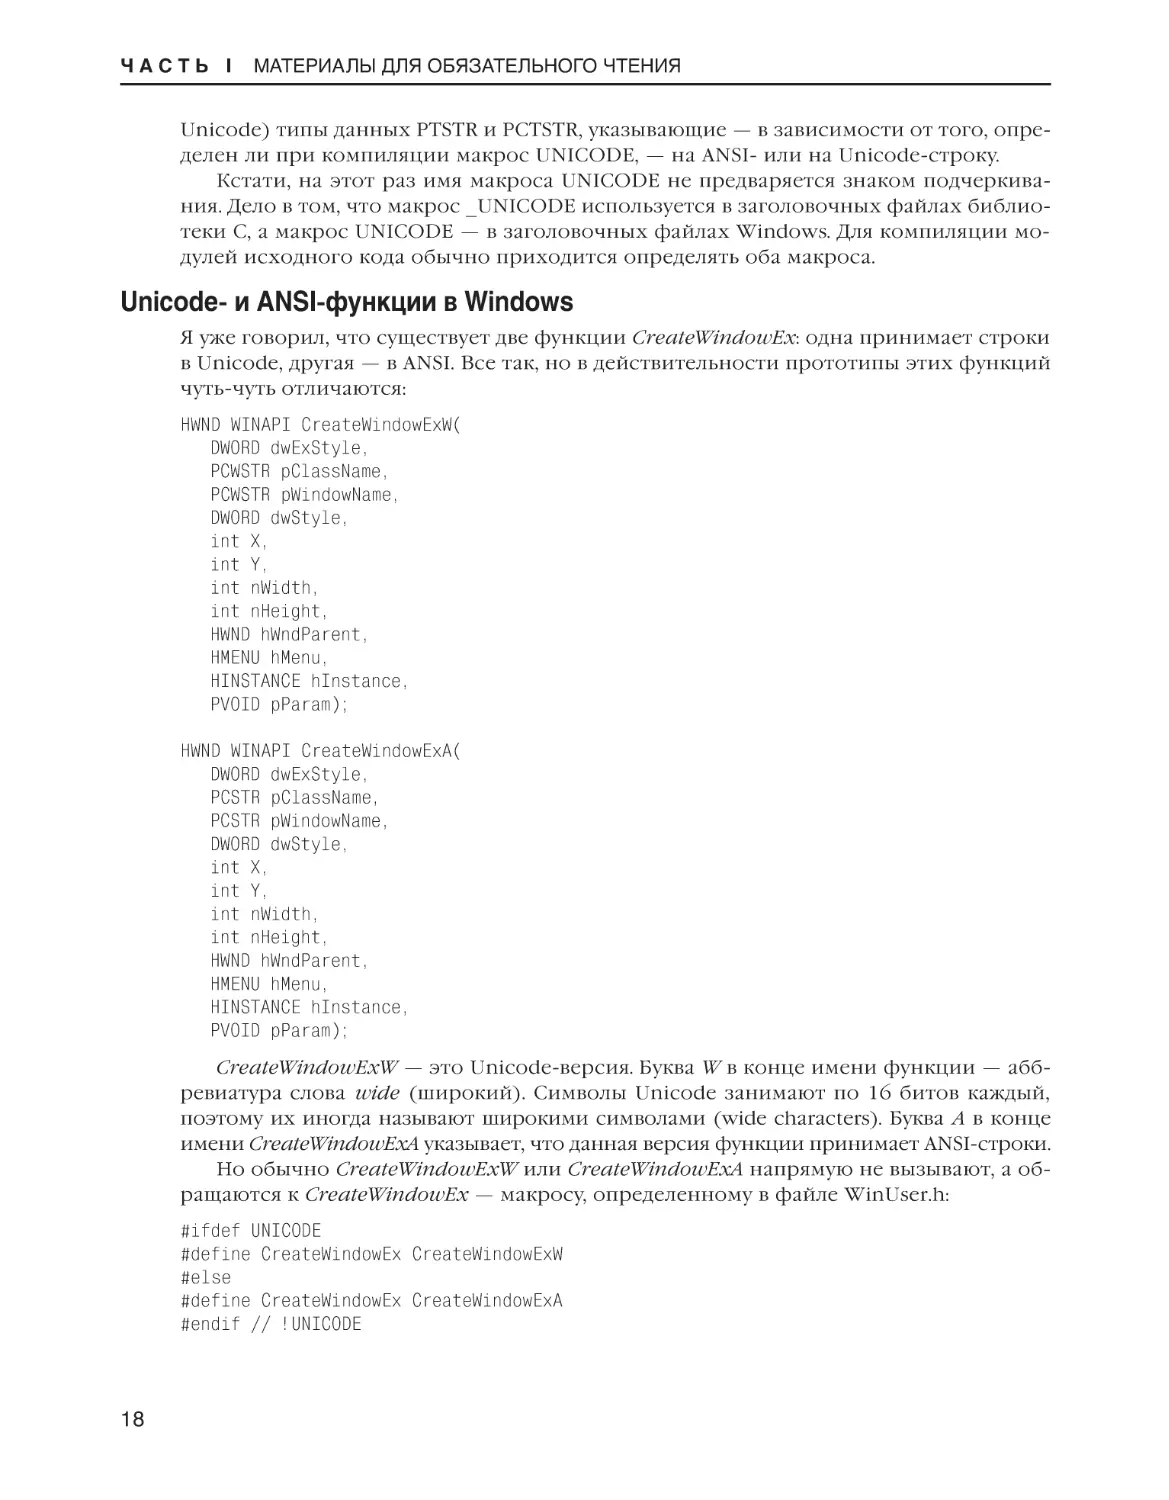 Unicode- и ANSI-функции в Windows